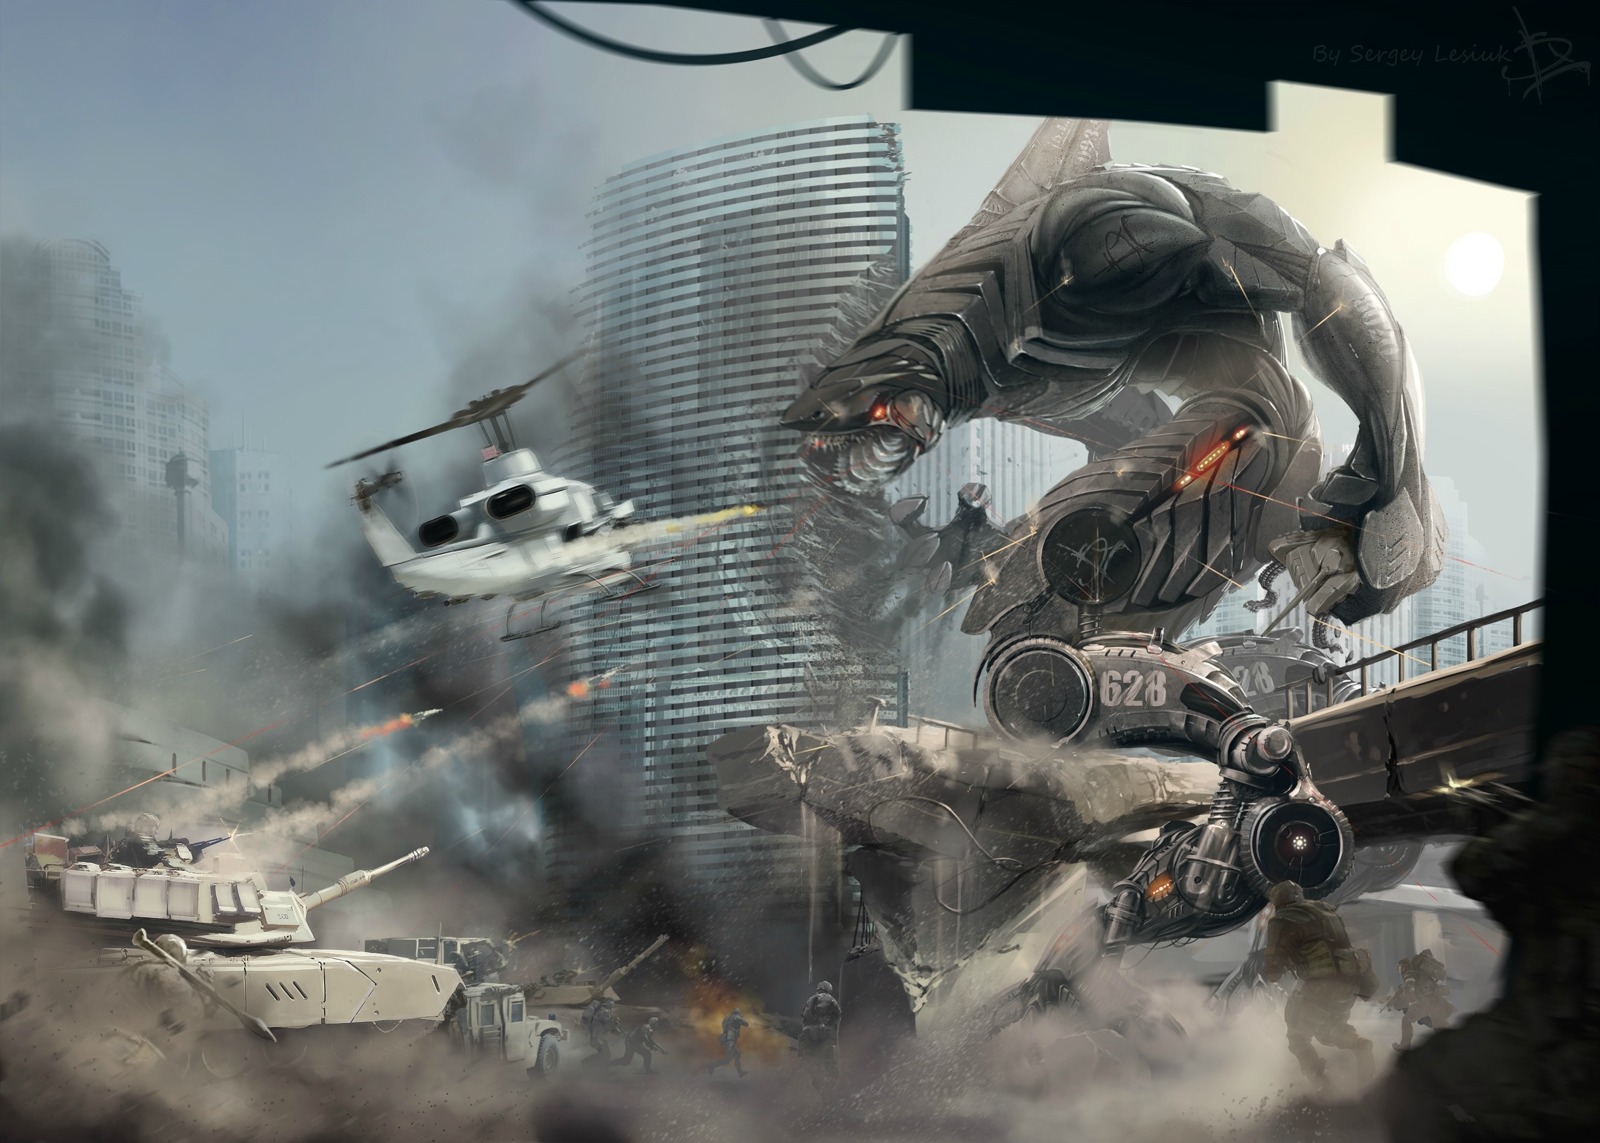 Sci-fi battle scene with futuristic technology